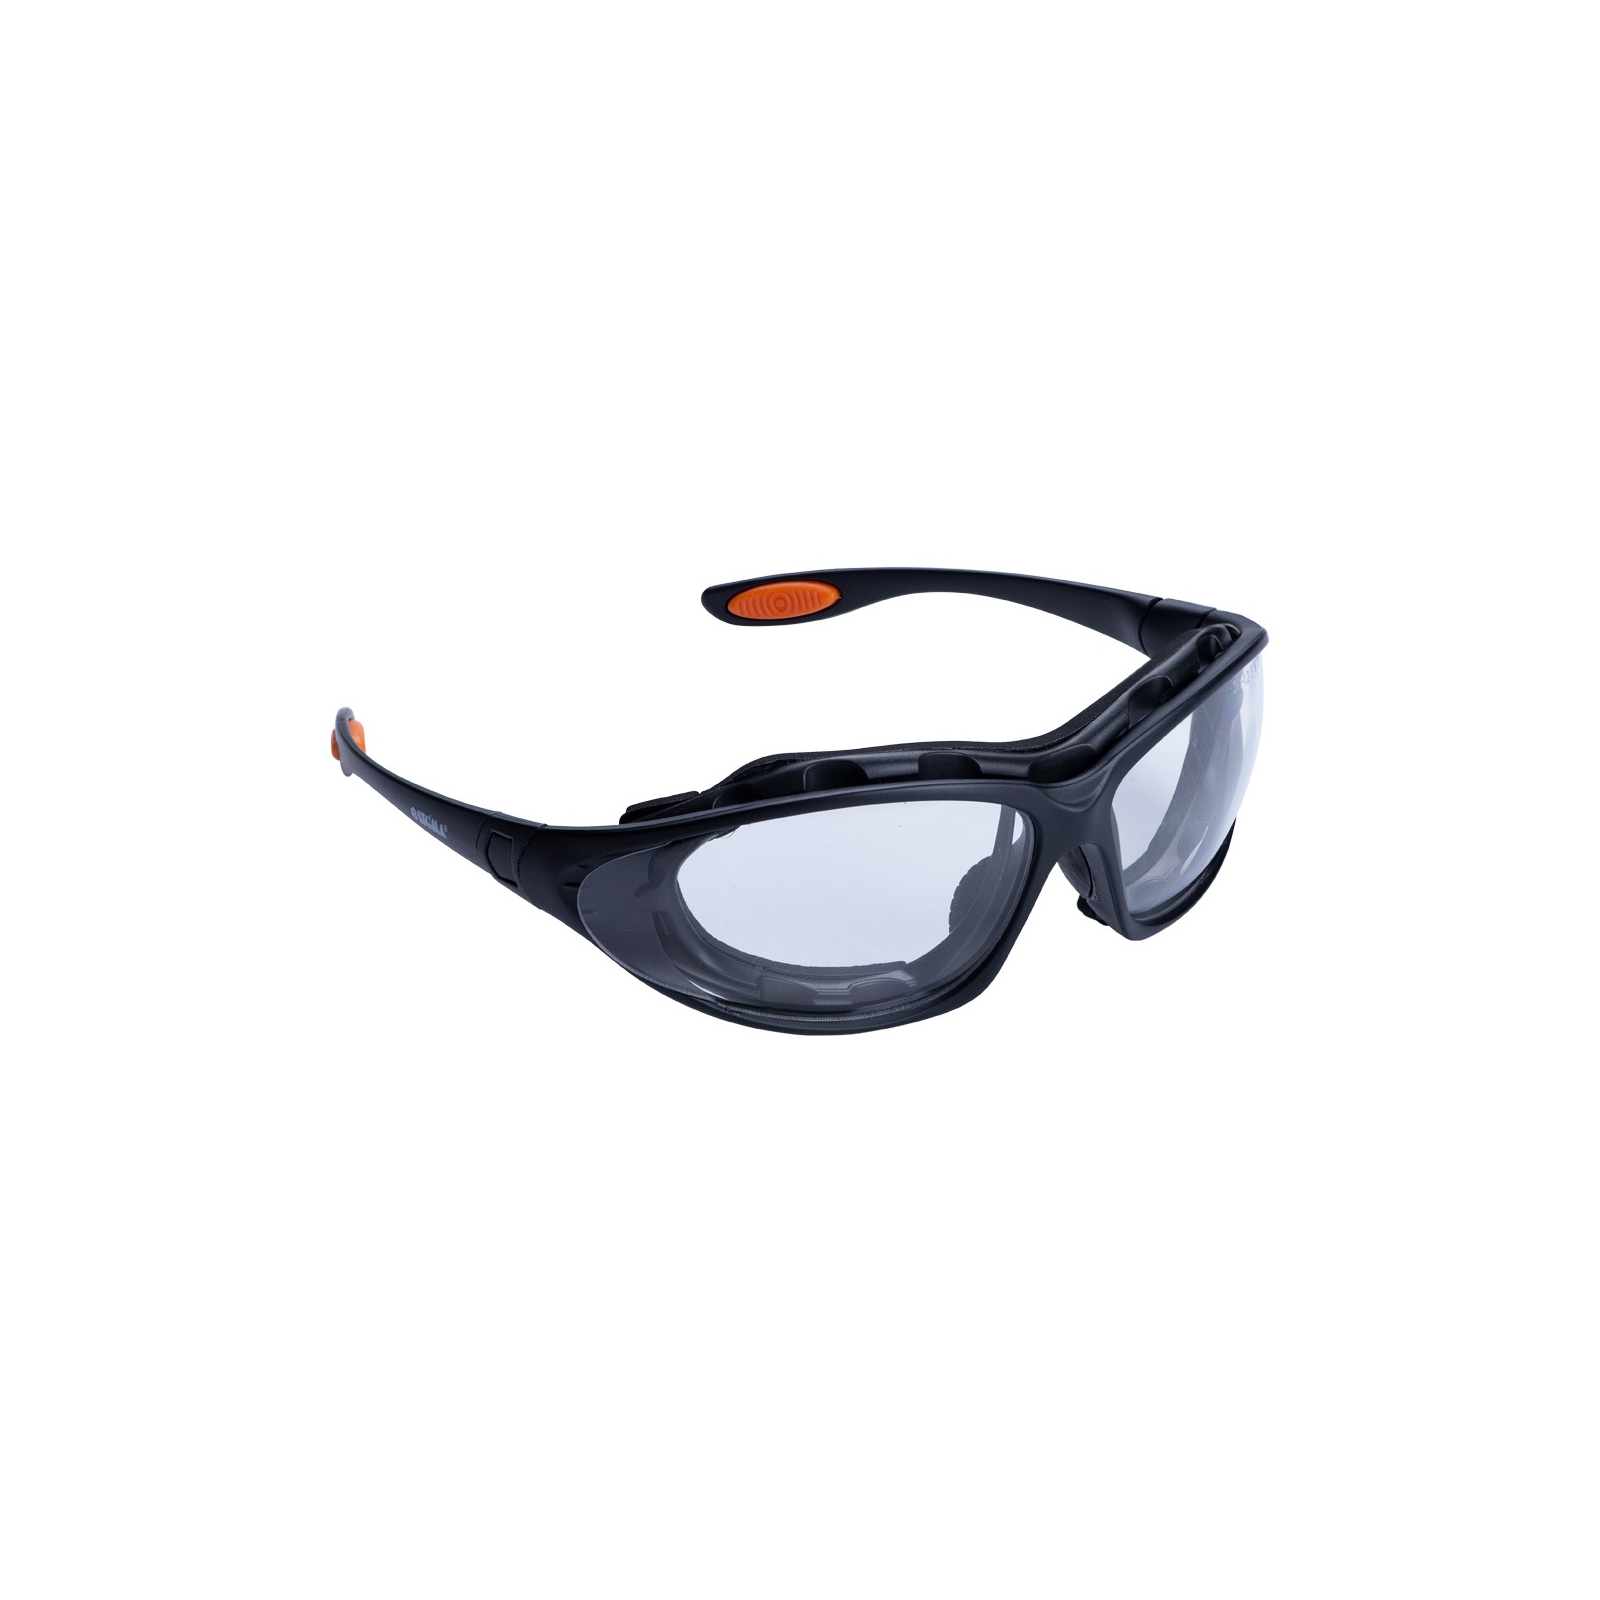 Защитные очки Sigma Super Zoom anti-scratch, anti-fog (9410911)